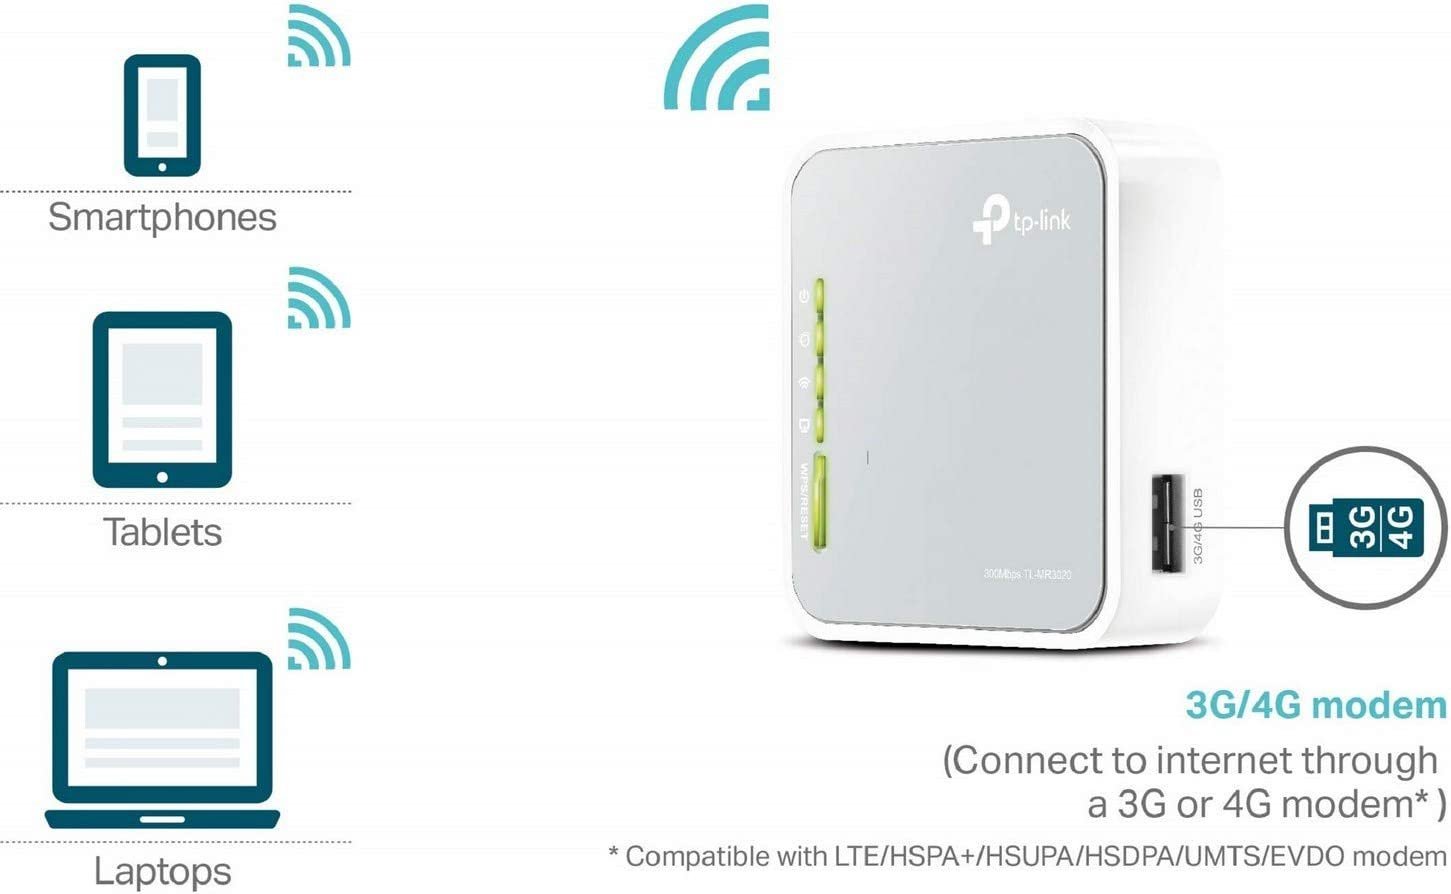 Roteador Wireless Portátil Tp Link Tl Mr3020 3G 4G 10 100Mbps Cinza E Branco - 4